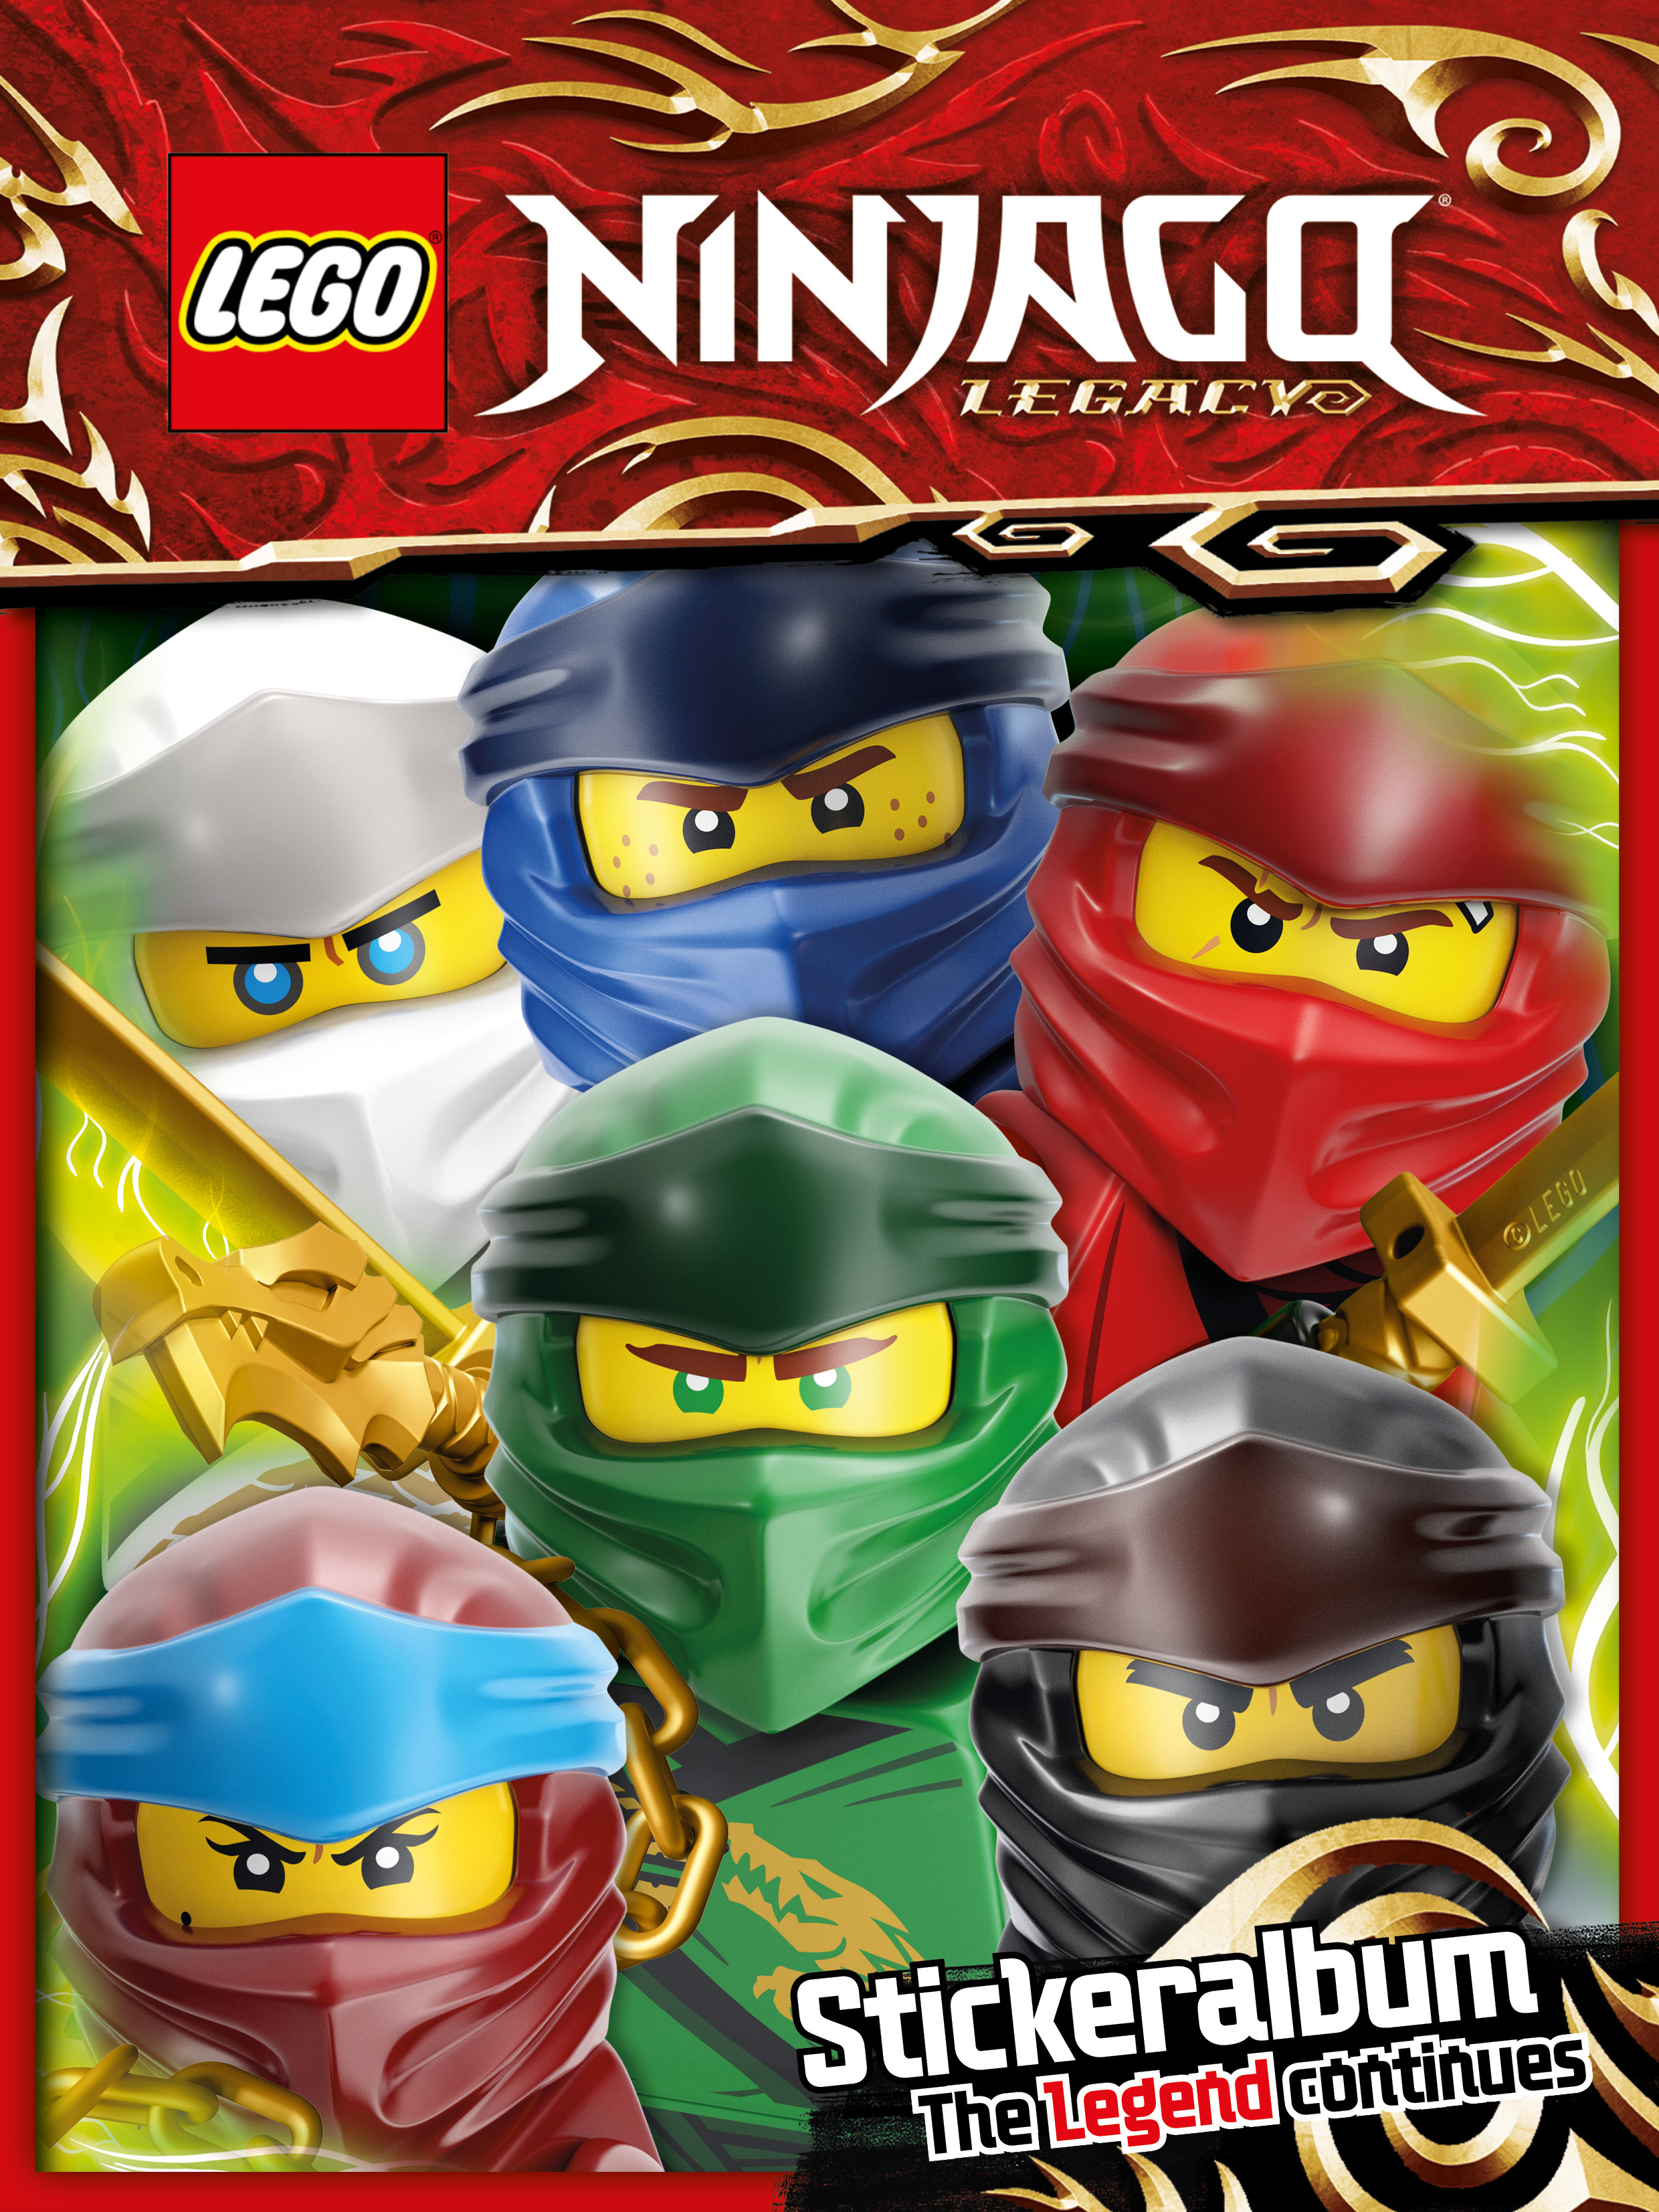 Lego Ninjago Legacy Sticker Nummer Nr 269 aus 289 Stickern